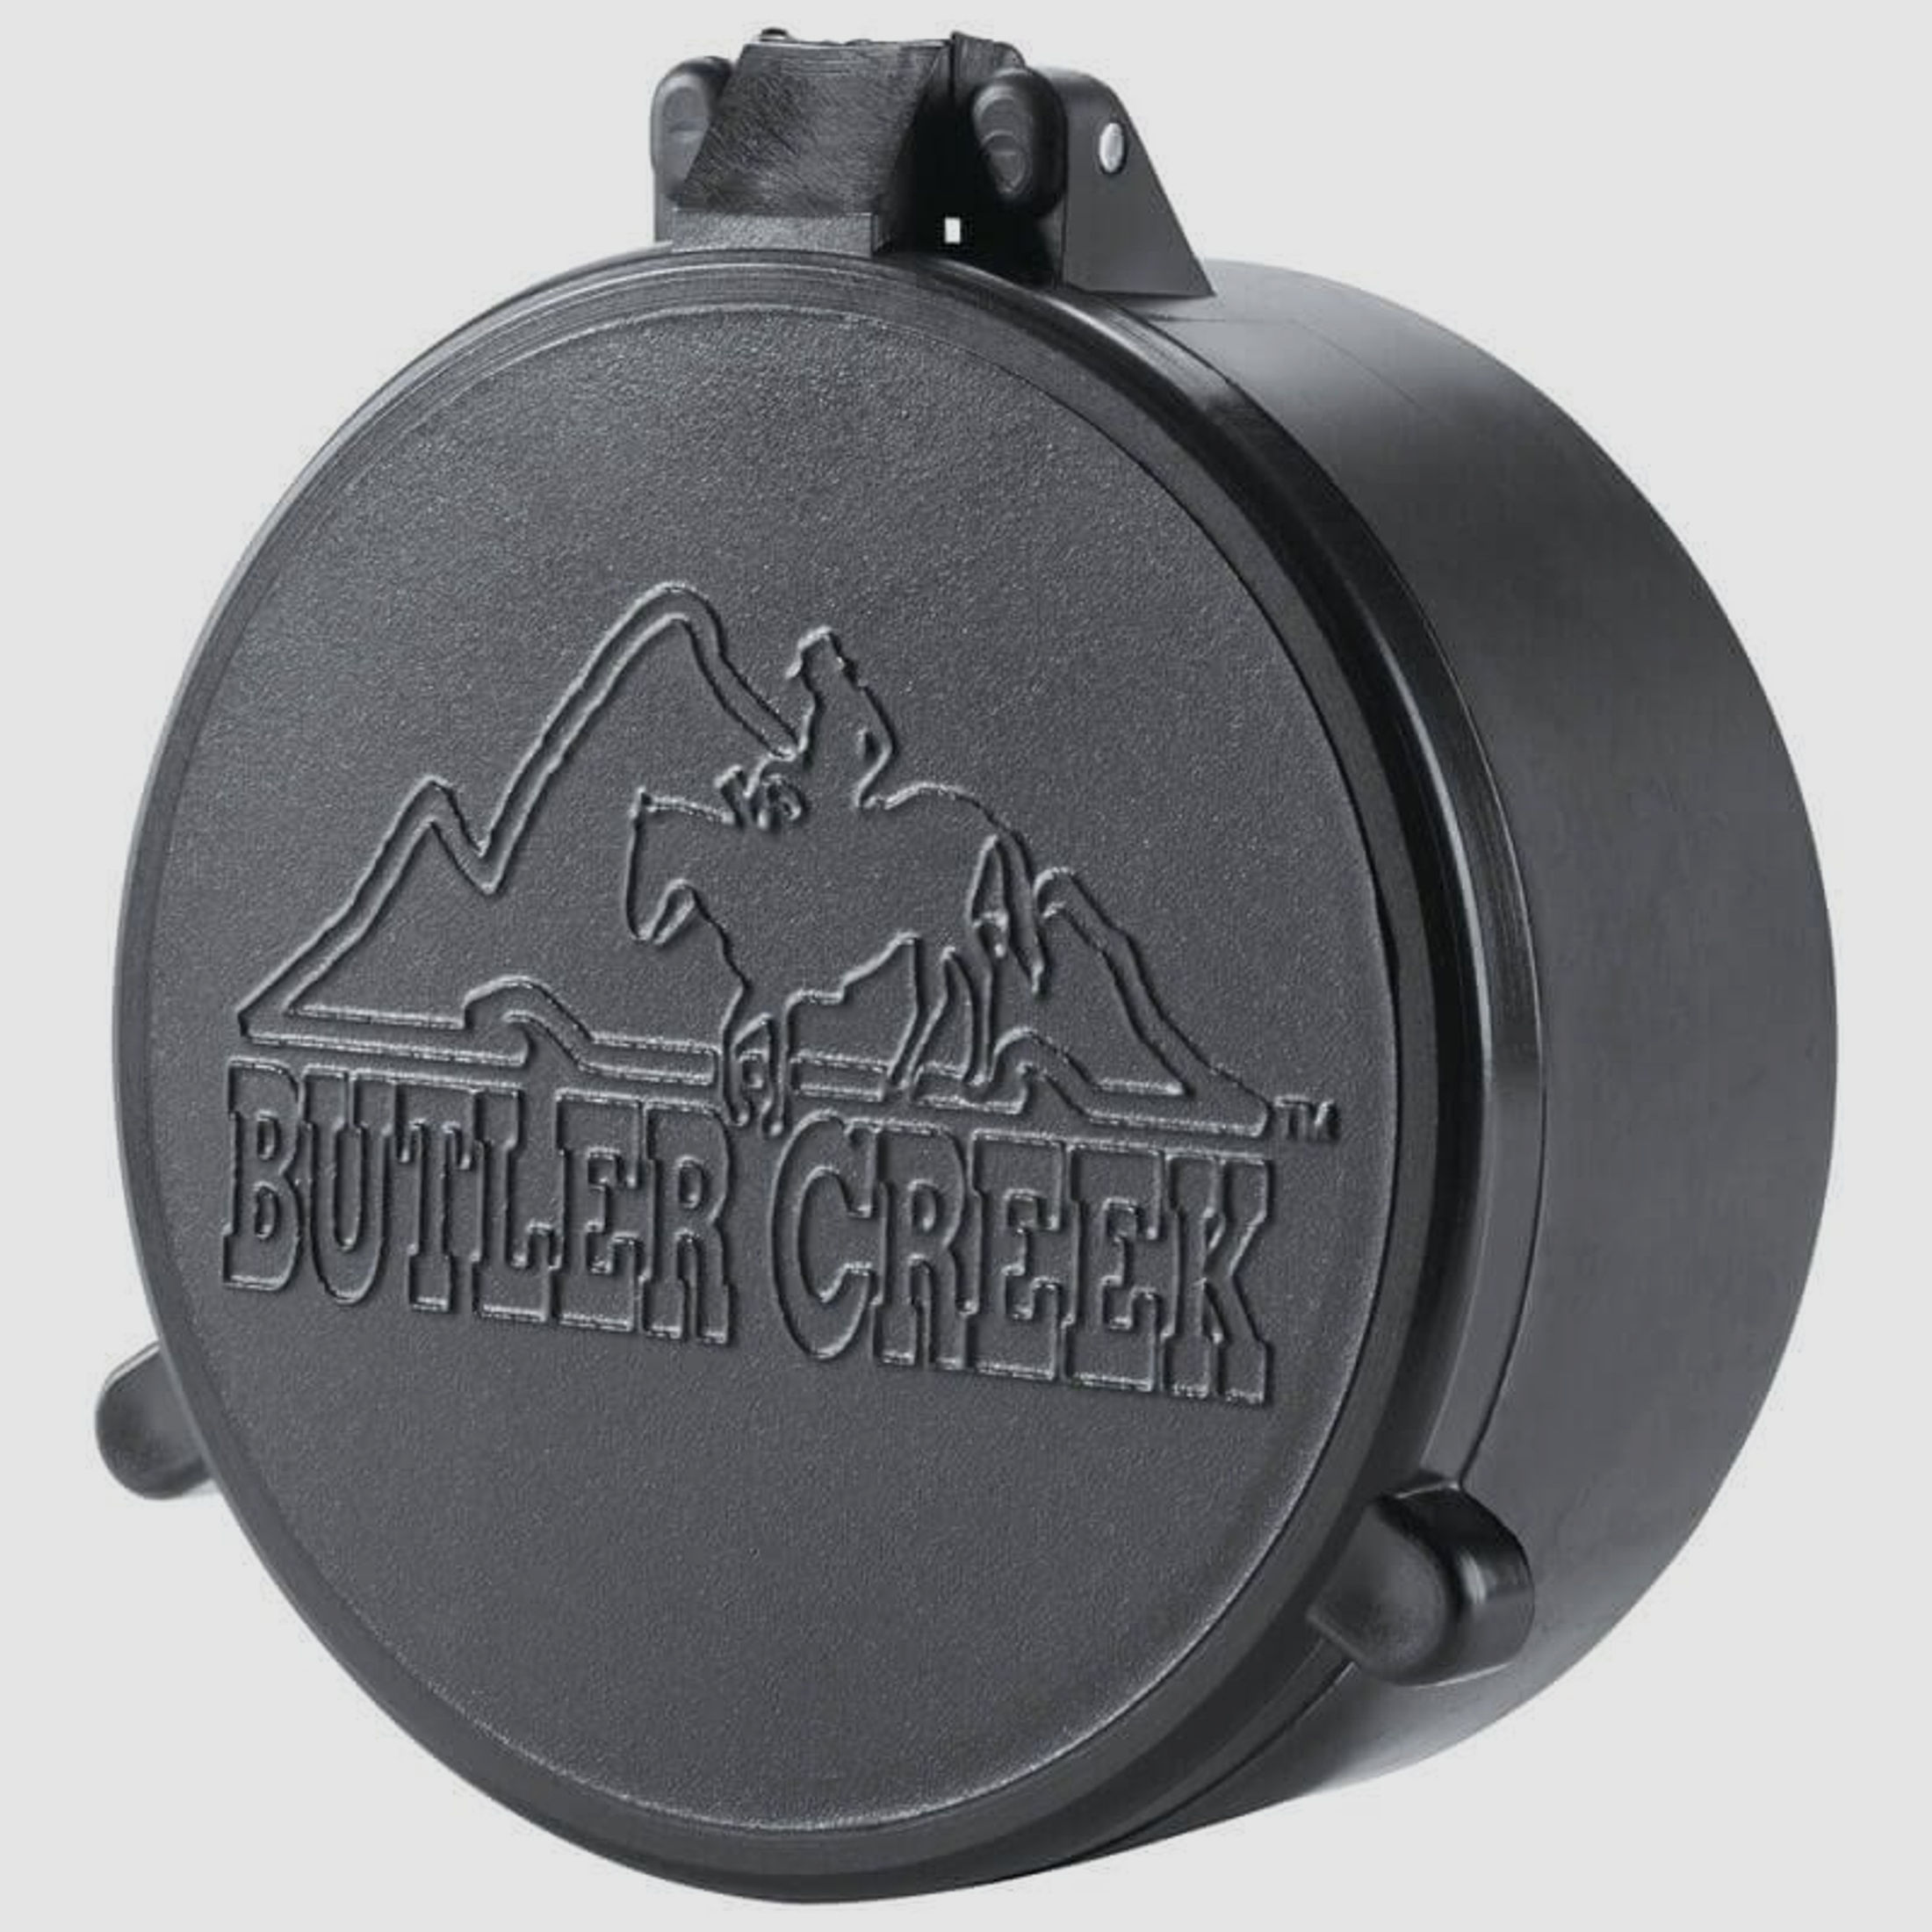 Butler Creek Objektivschutzkappe - Flip-Open Flip Cover Objektiv: 25,4mm #01